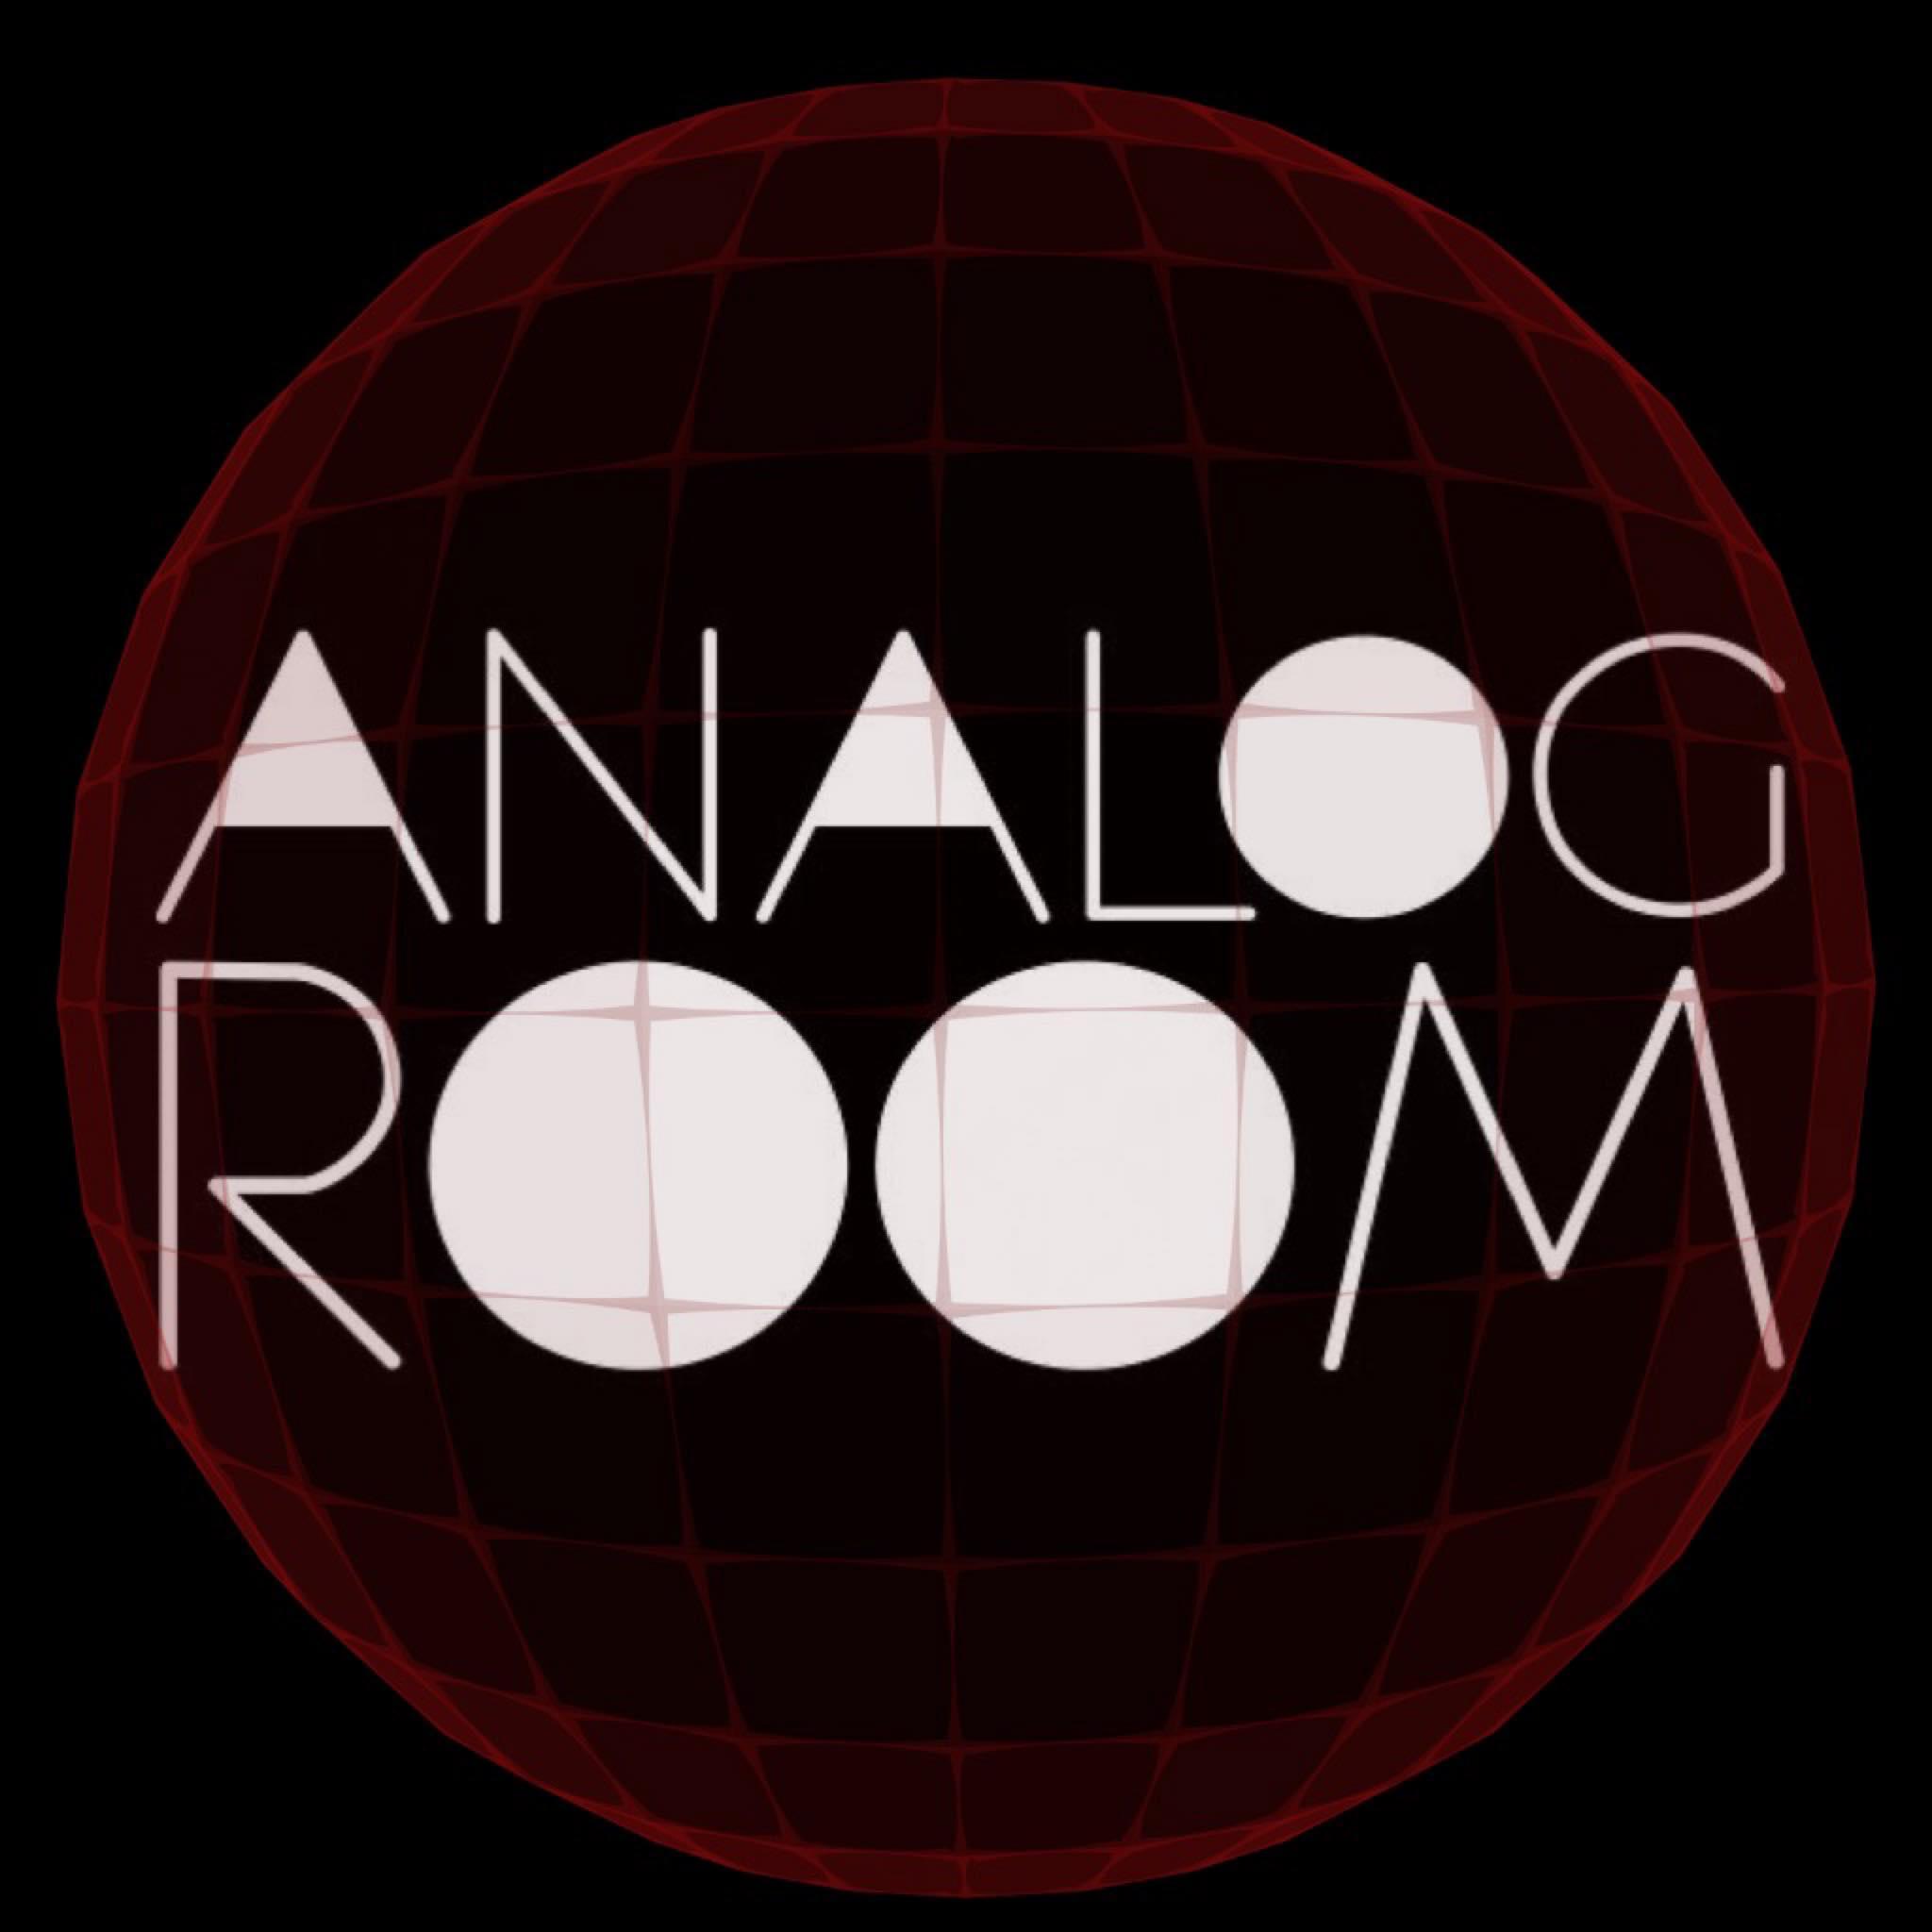 Analog Room pres. Ostrich - Nasrawi